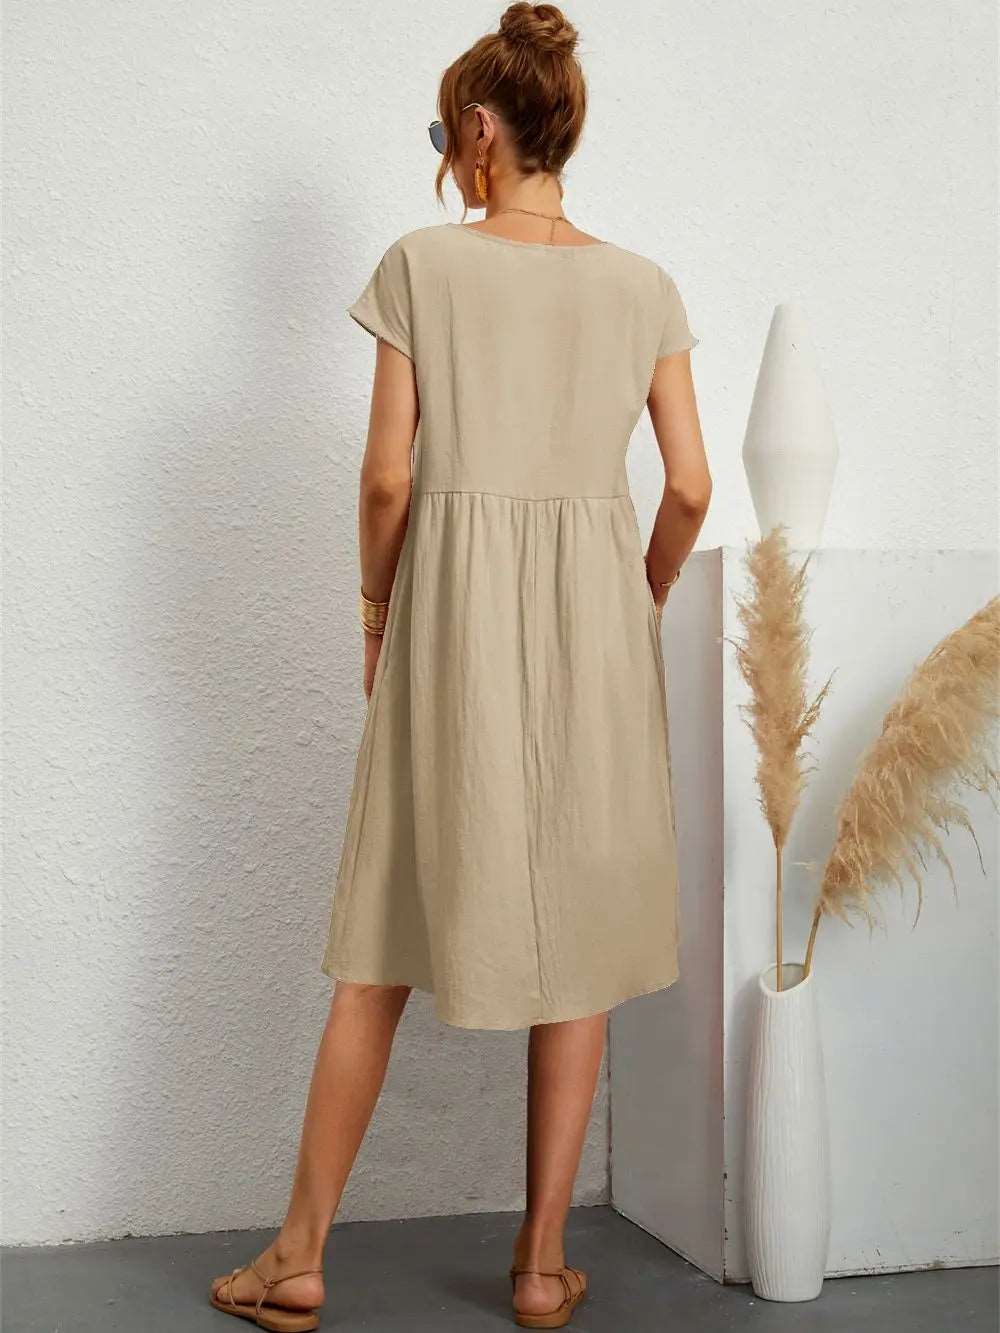 Women's casual dresses | Comfortable knee length with pockets |BEGOGI SHOP |